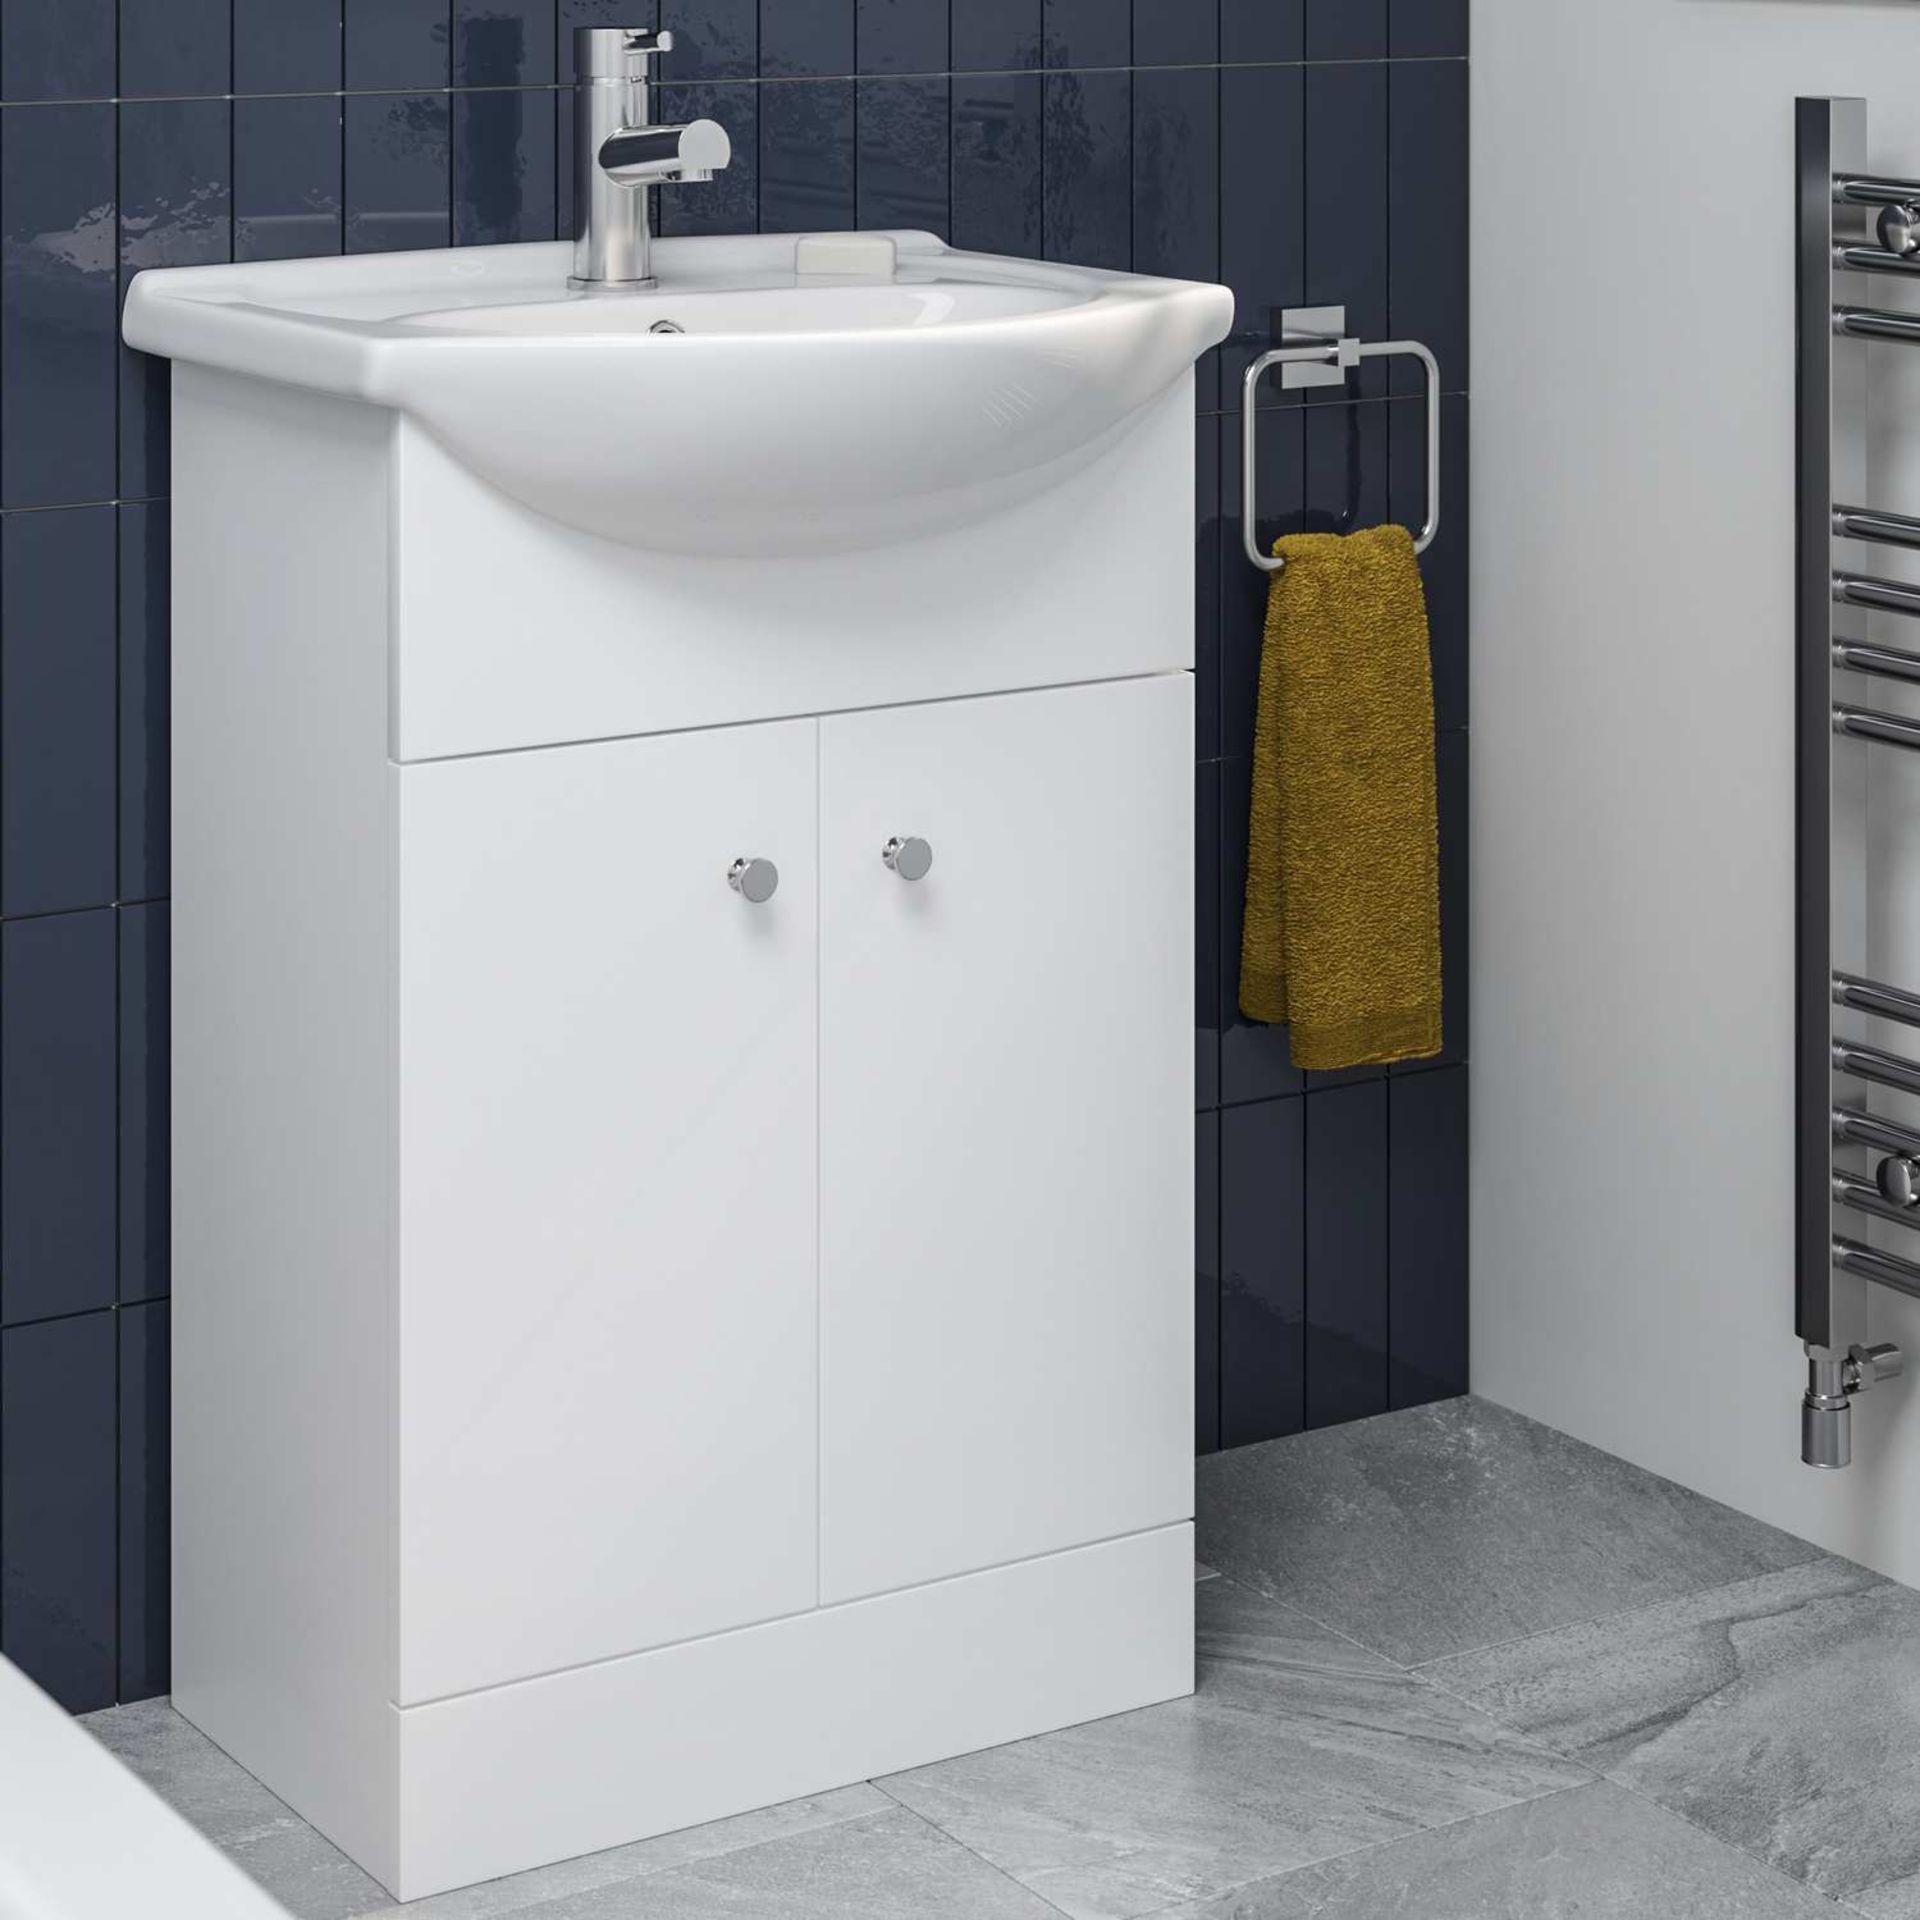 BRAND NEW BOXED 514mm Quartz White Basin Vanity Unit- Floor Standing. RRP £189.99. Comes complete